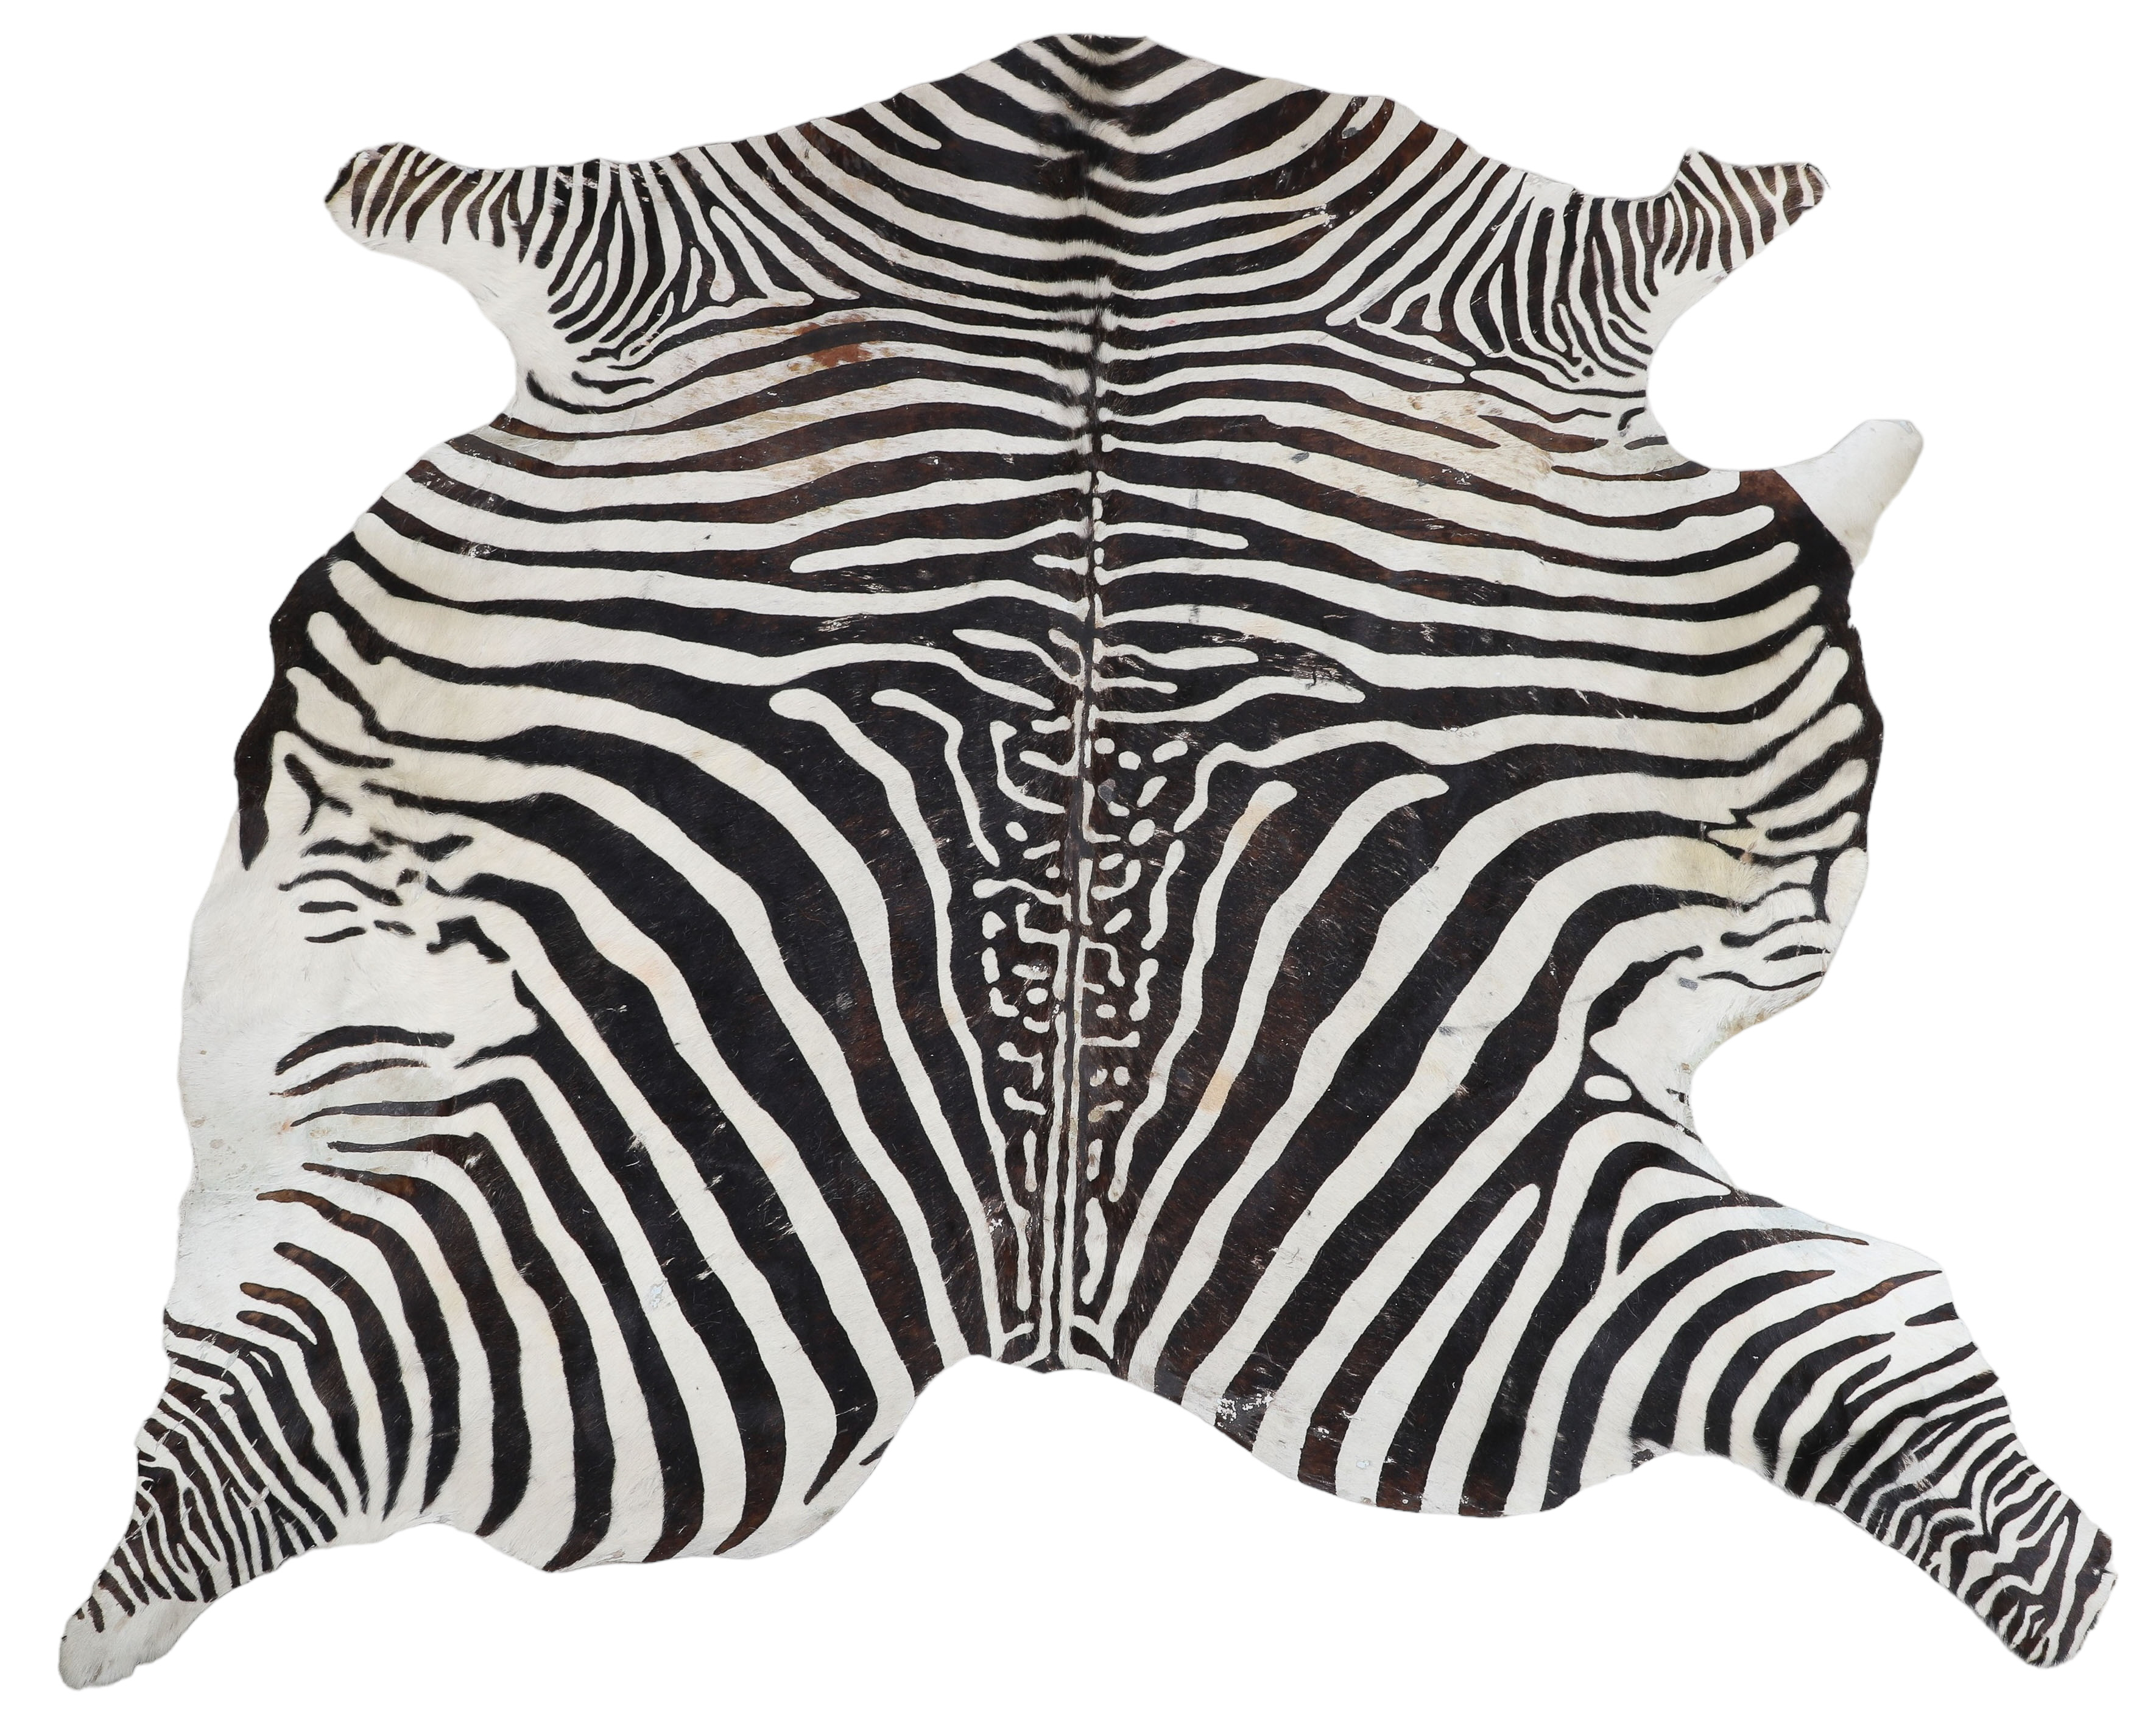 A free form zebra hair rug, 60L x 78